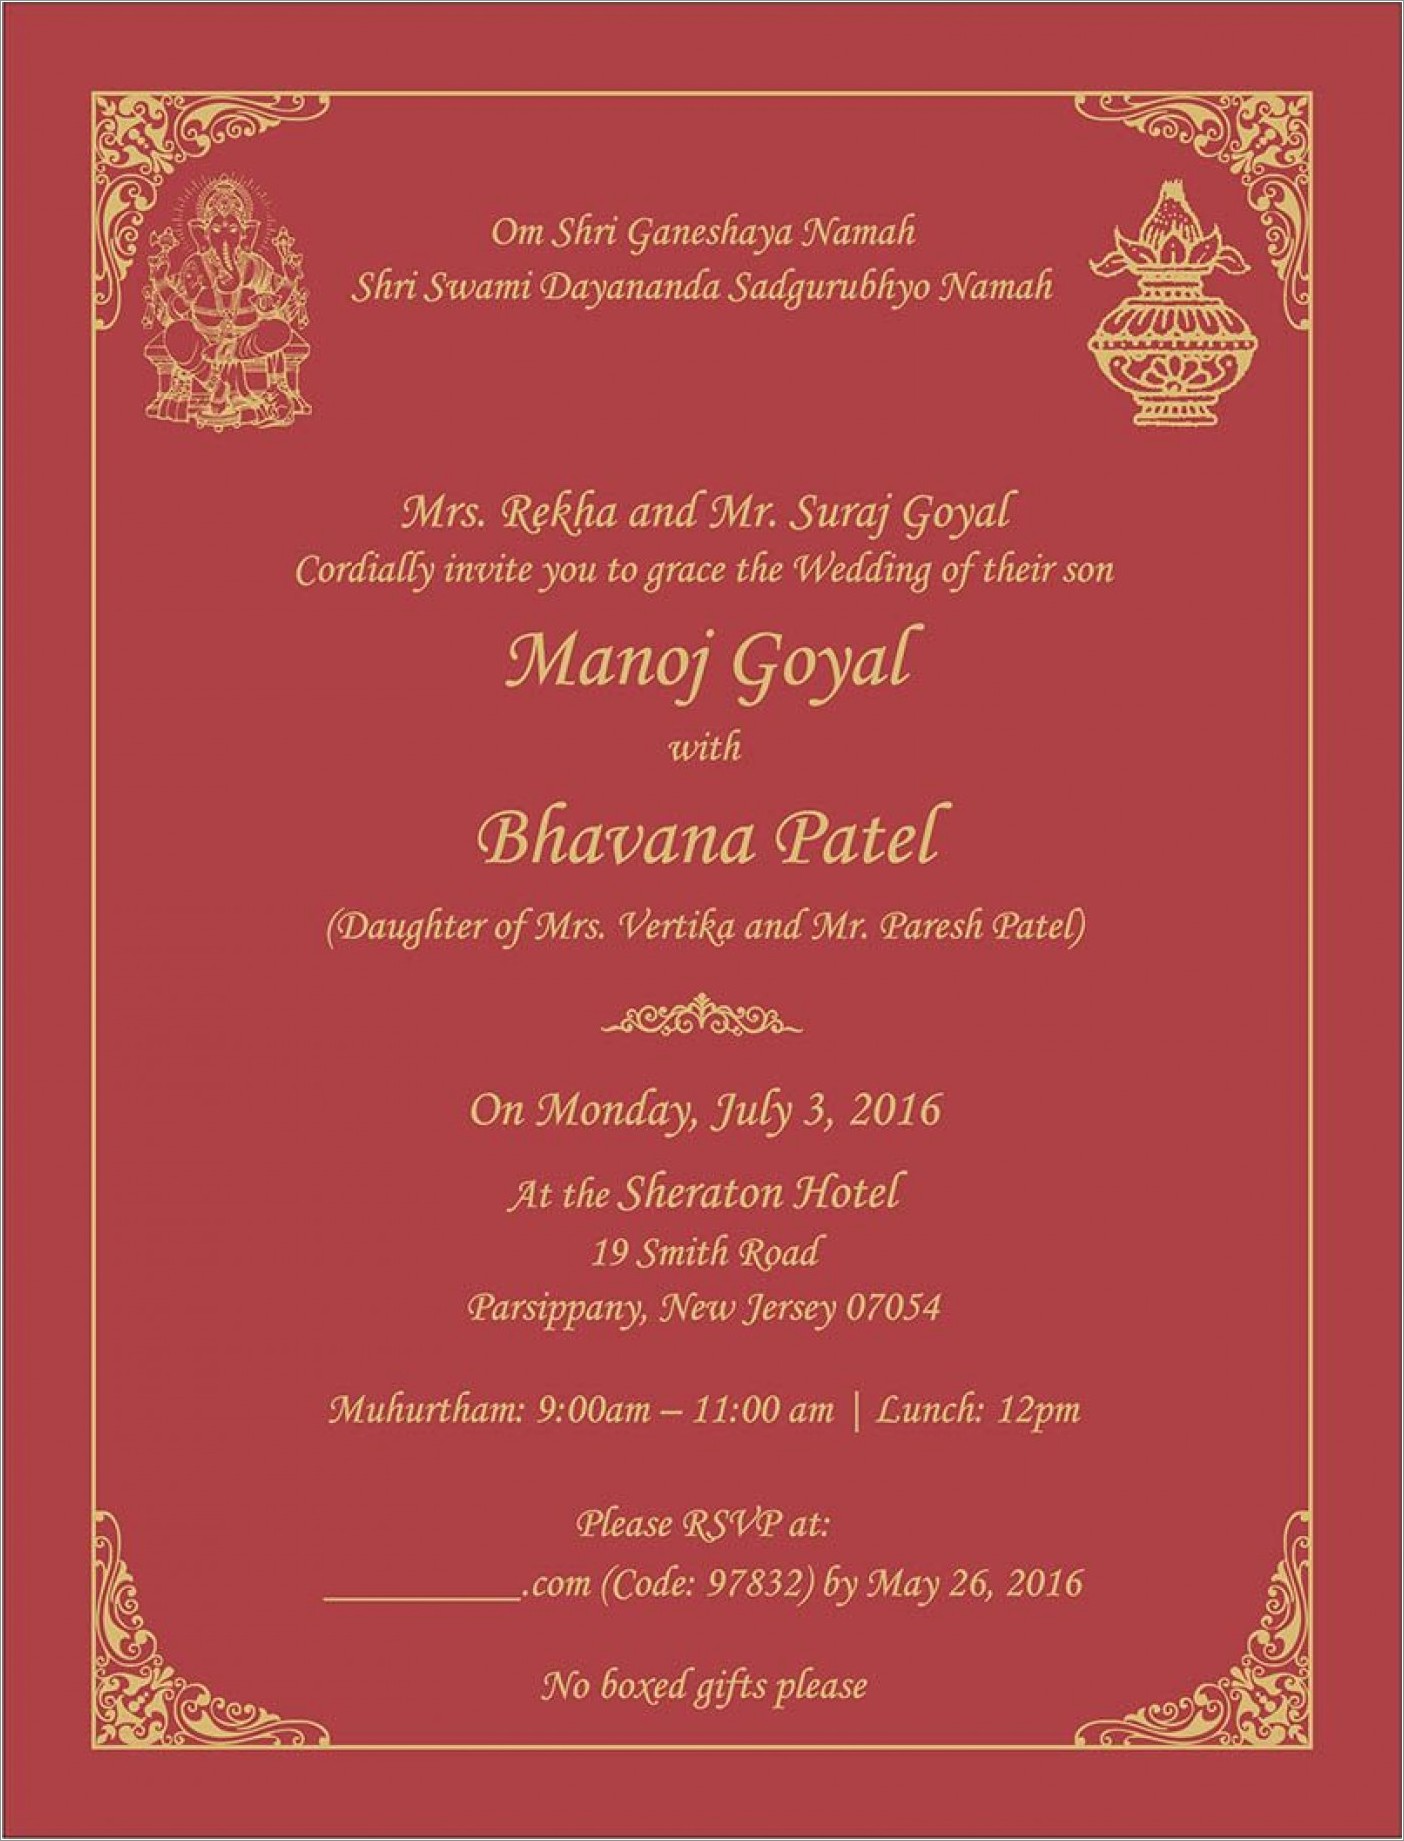 Wedding Invitation Card In Hindi Language